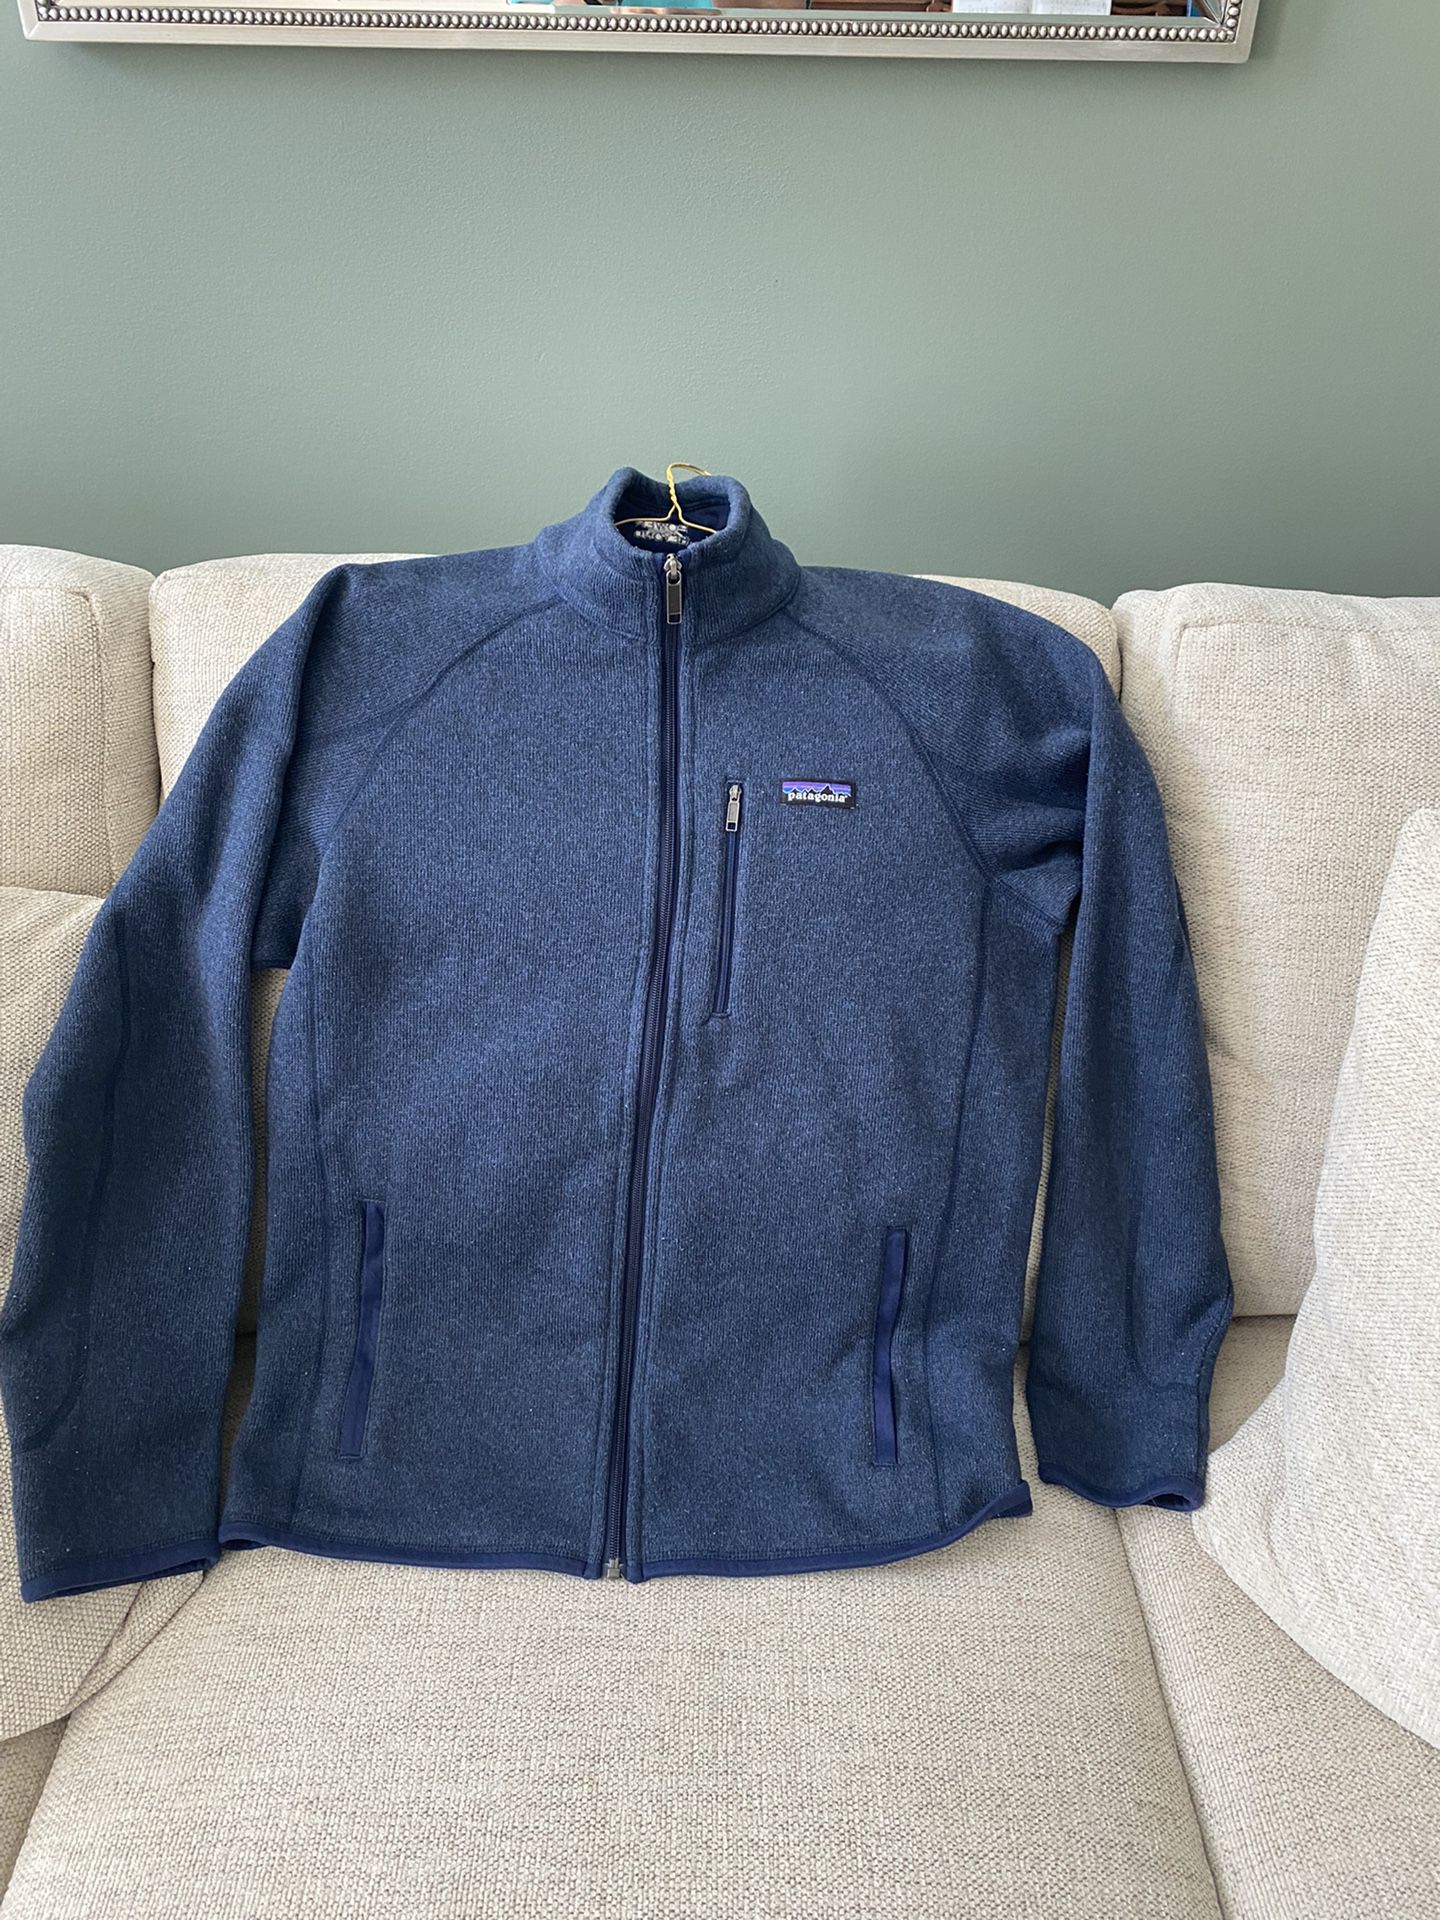 Patagonia Better Sweater Full Zip Jacket Men’s Medium